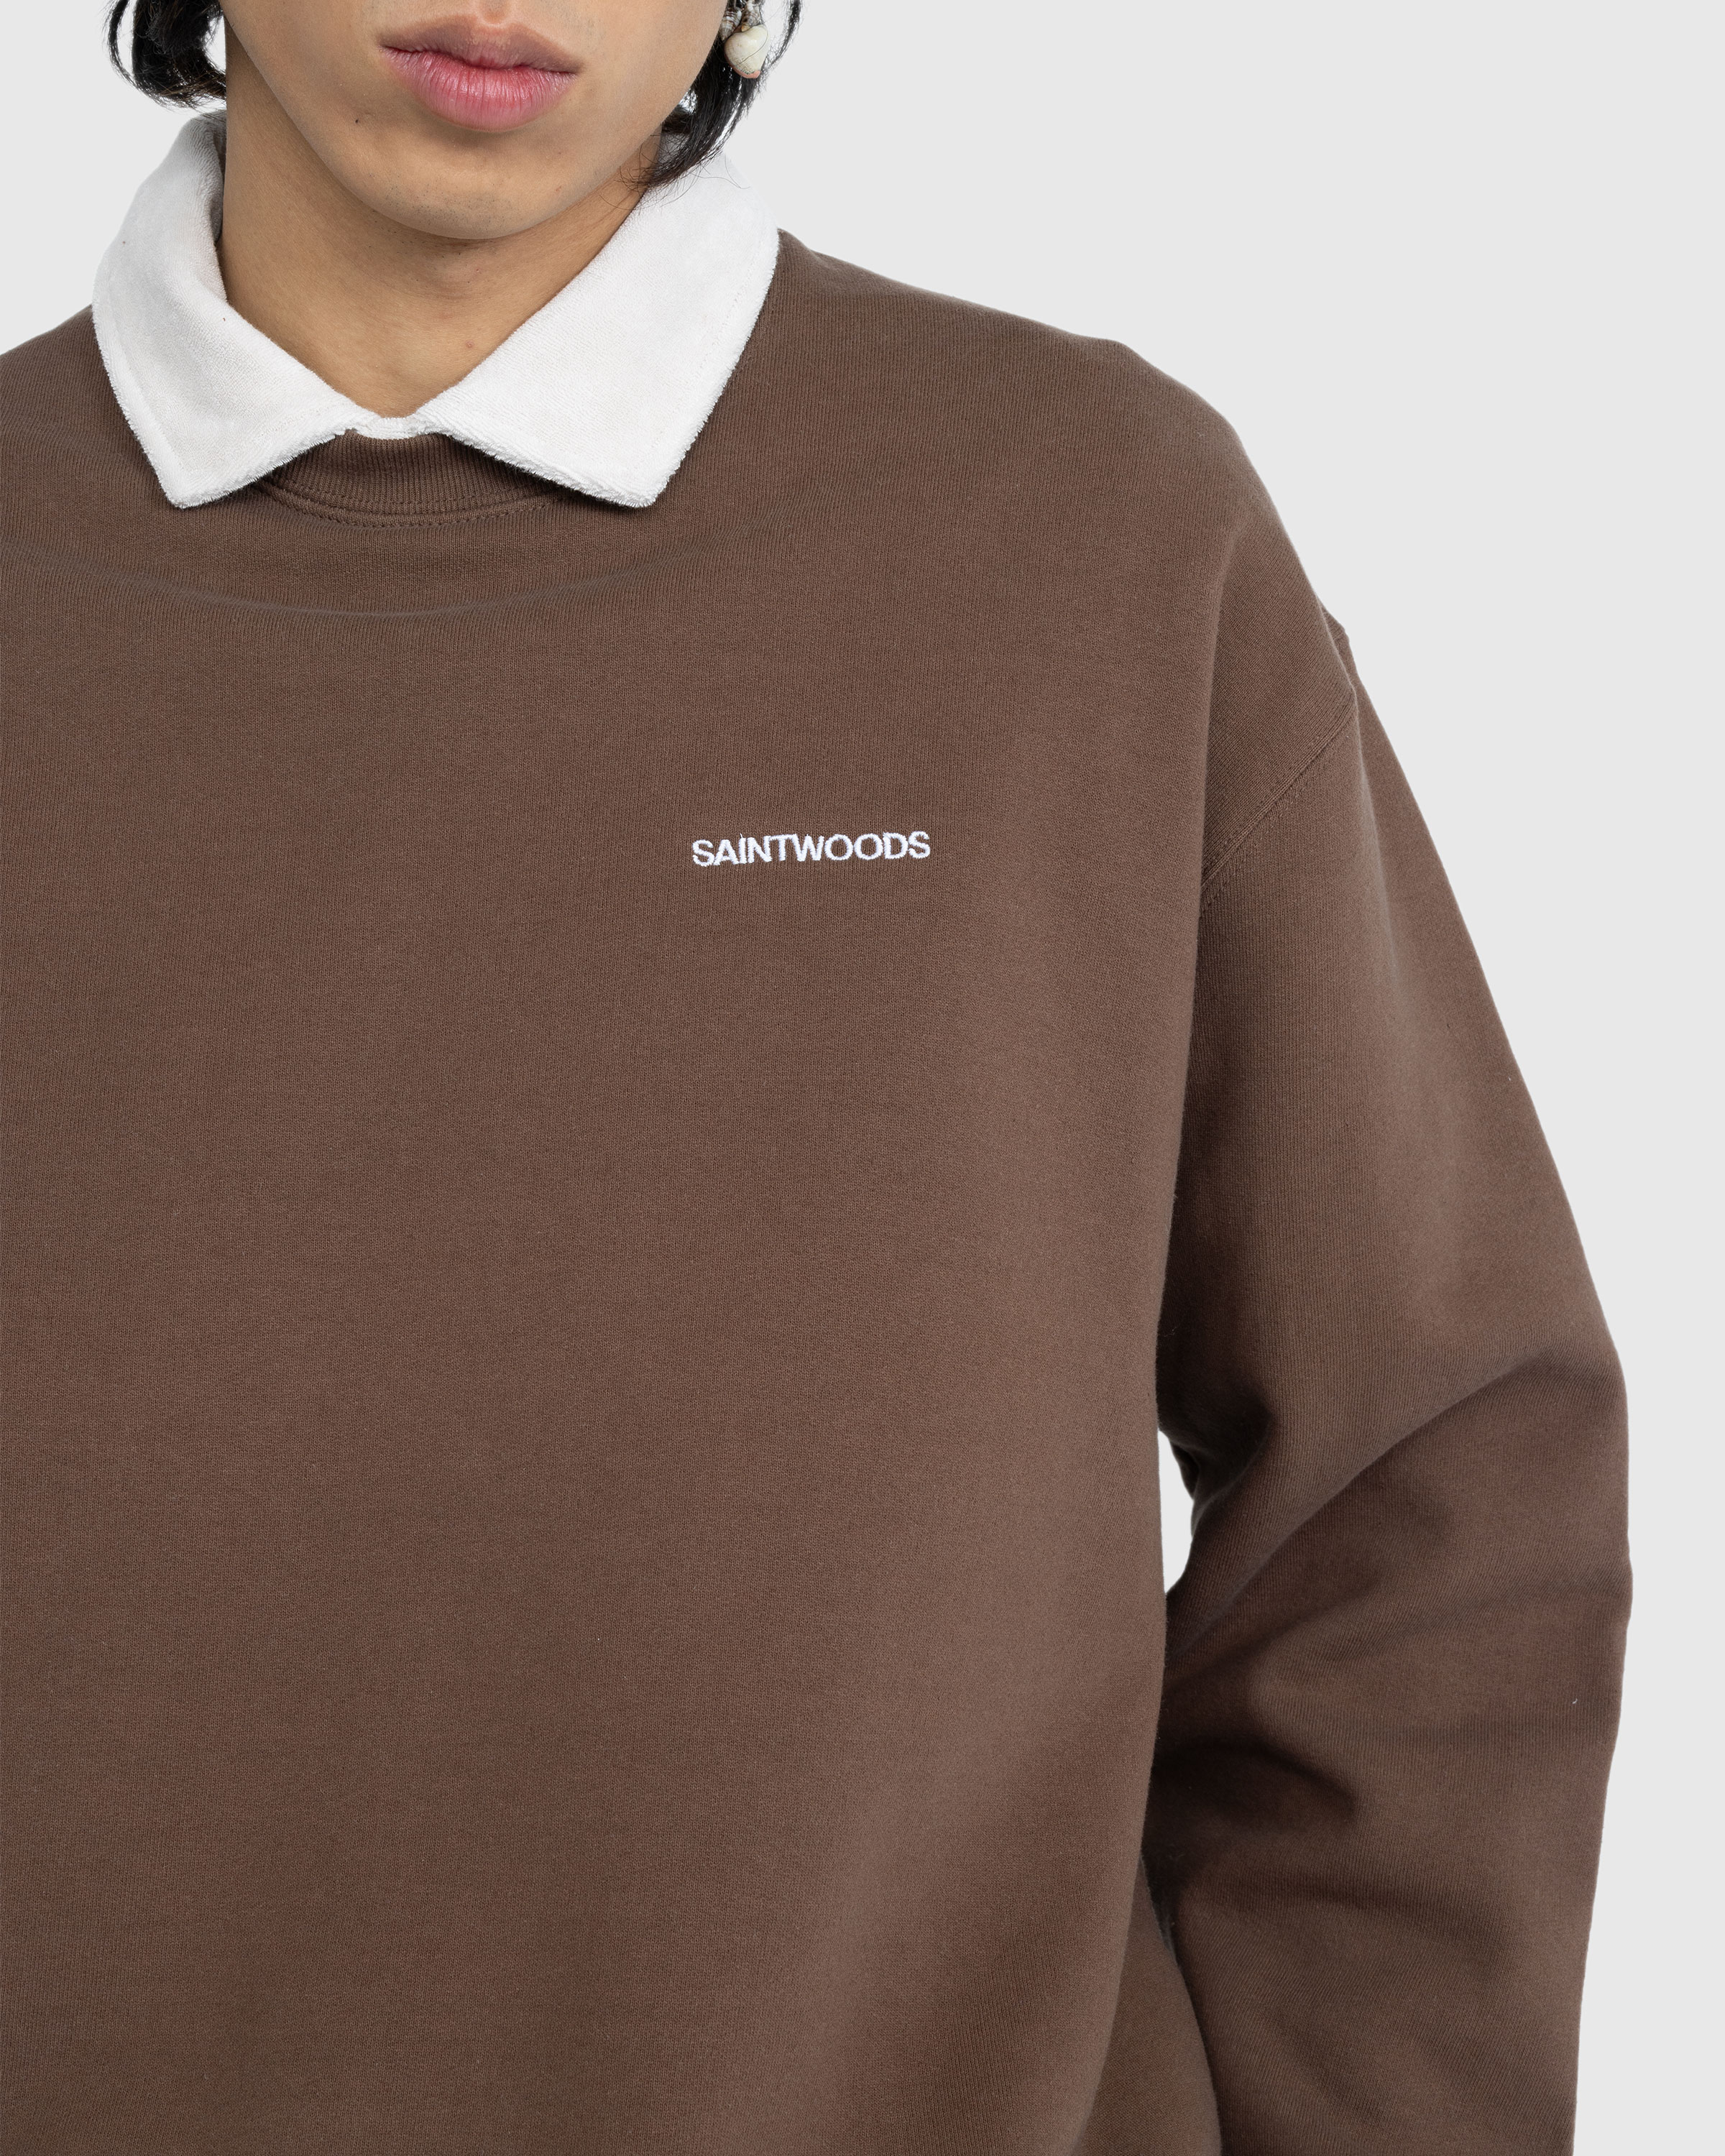 Saintwoods - SW Sweatshirt Brown - Clothing - Brown - Image 5